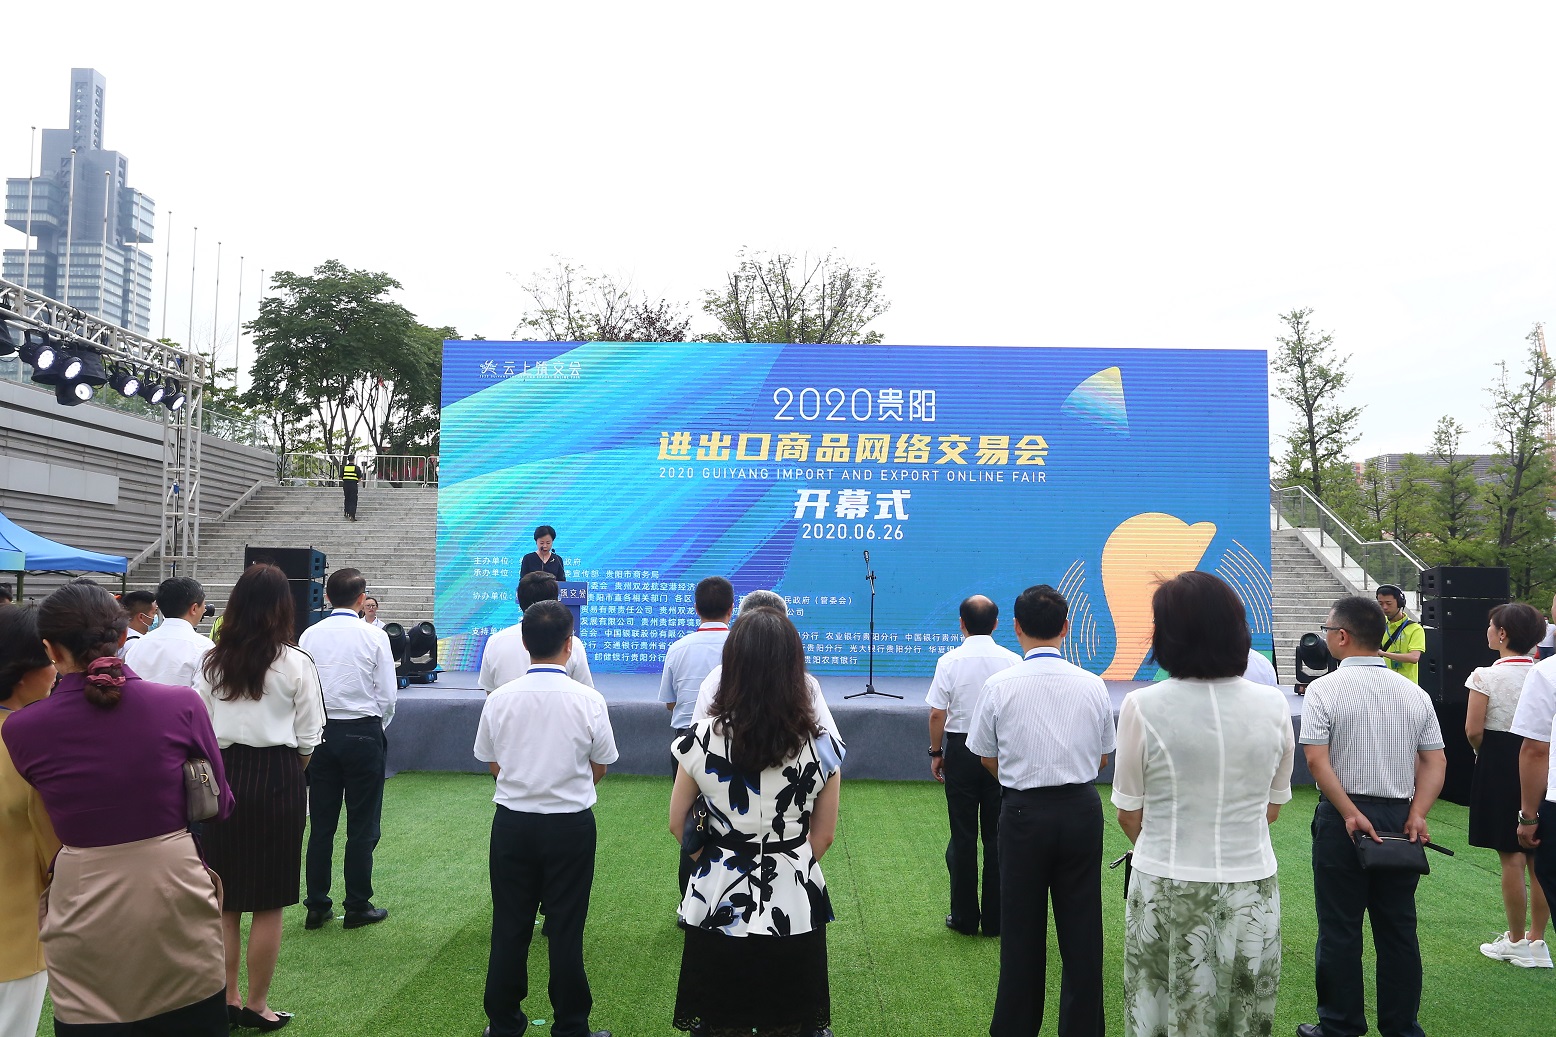 haiwainet.cn เผยมูลค่าการซื้อขายในงาน 2020 China Guiyang Fair พุ่งแตะ 166 ล้านดอลลาร์